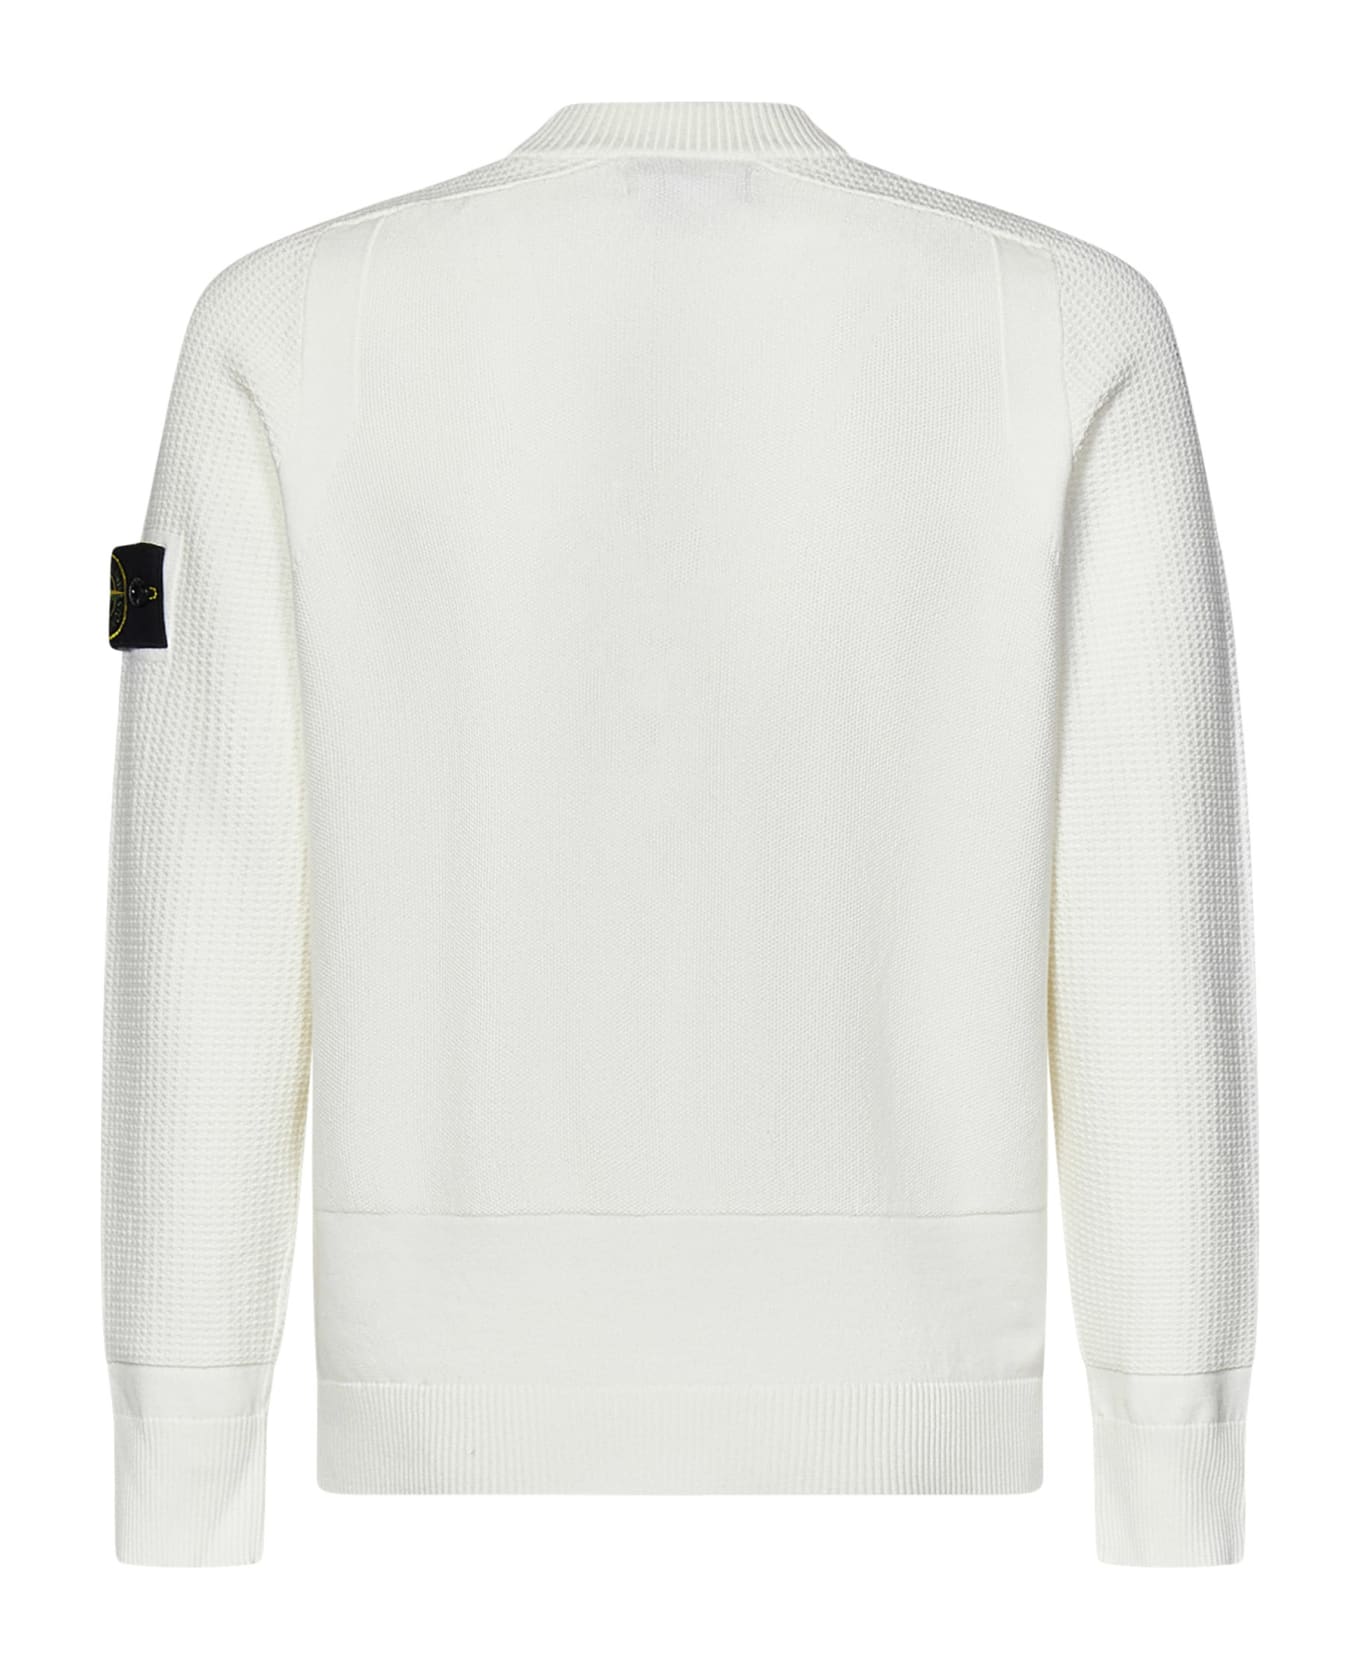 Stone Island Sweater - White